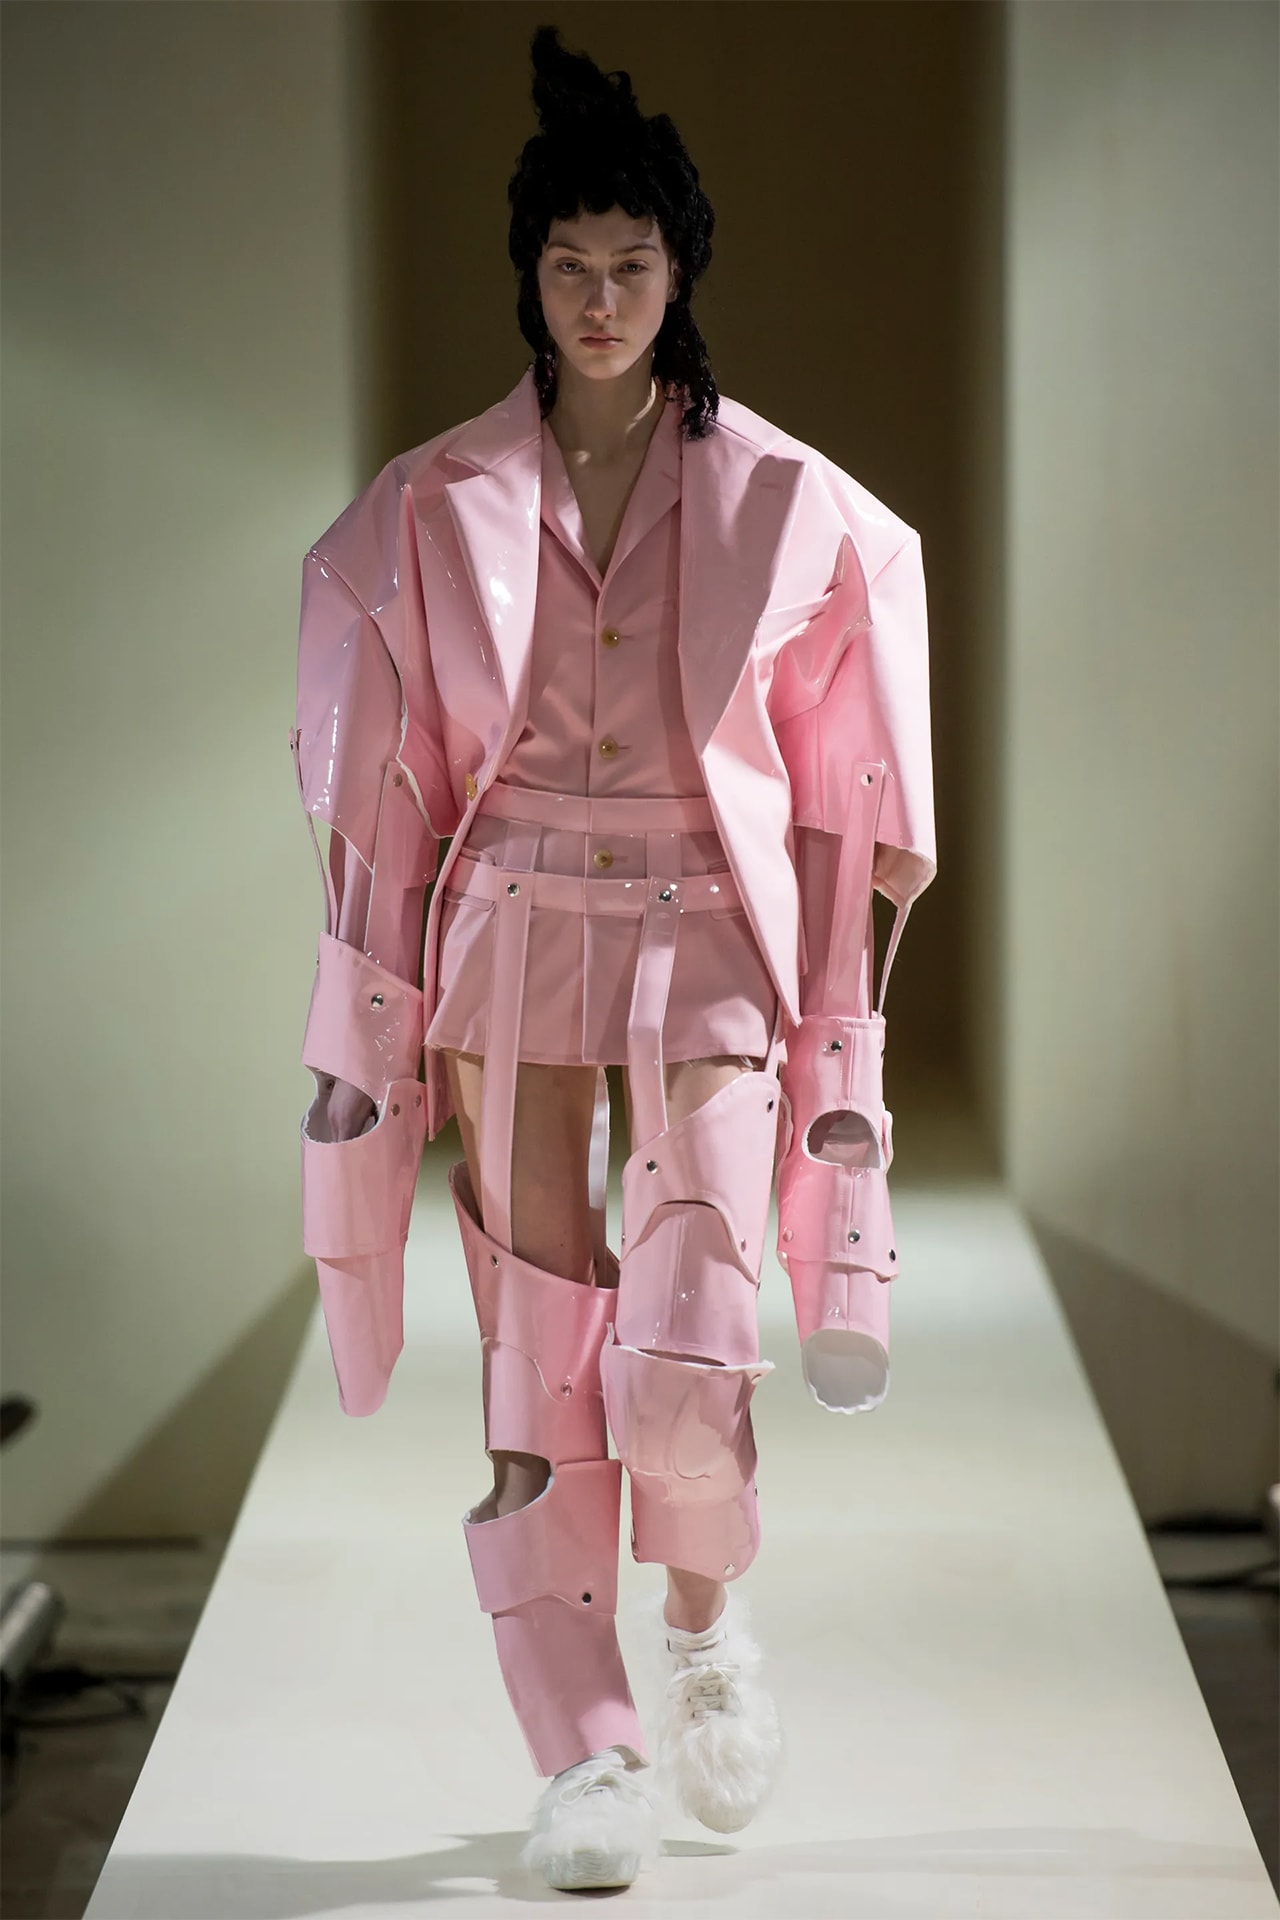 Rei Kawakubo founder designer japanese Comme des Garçons most subversive designs